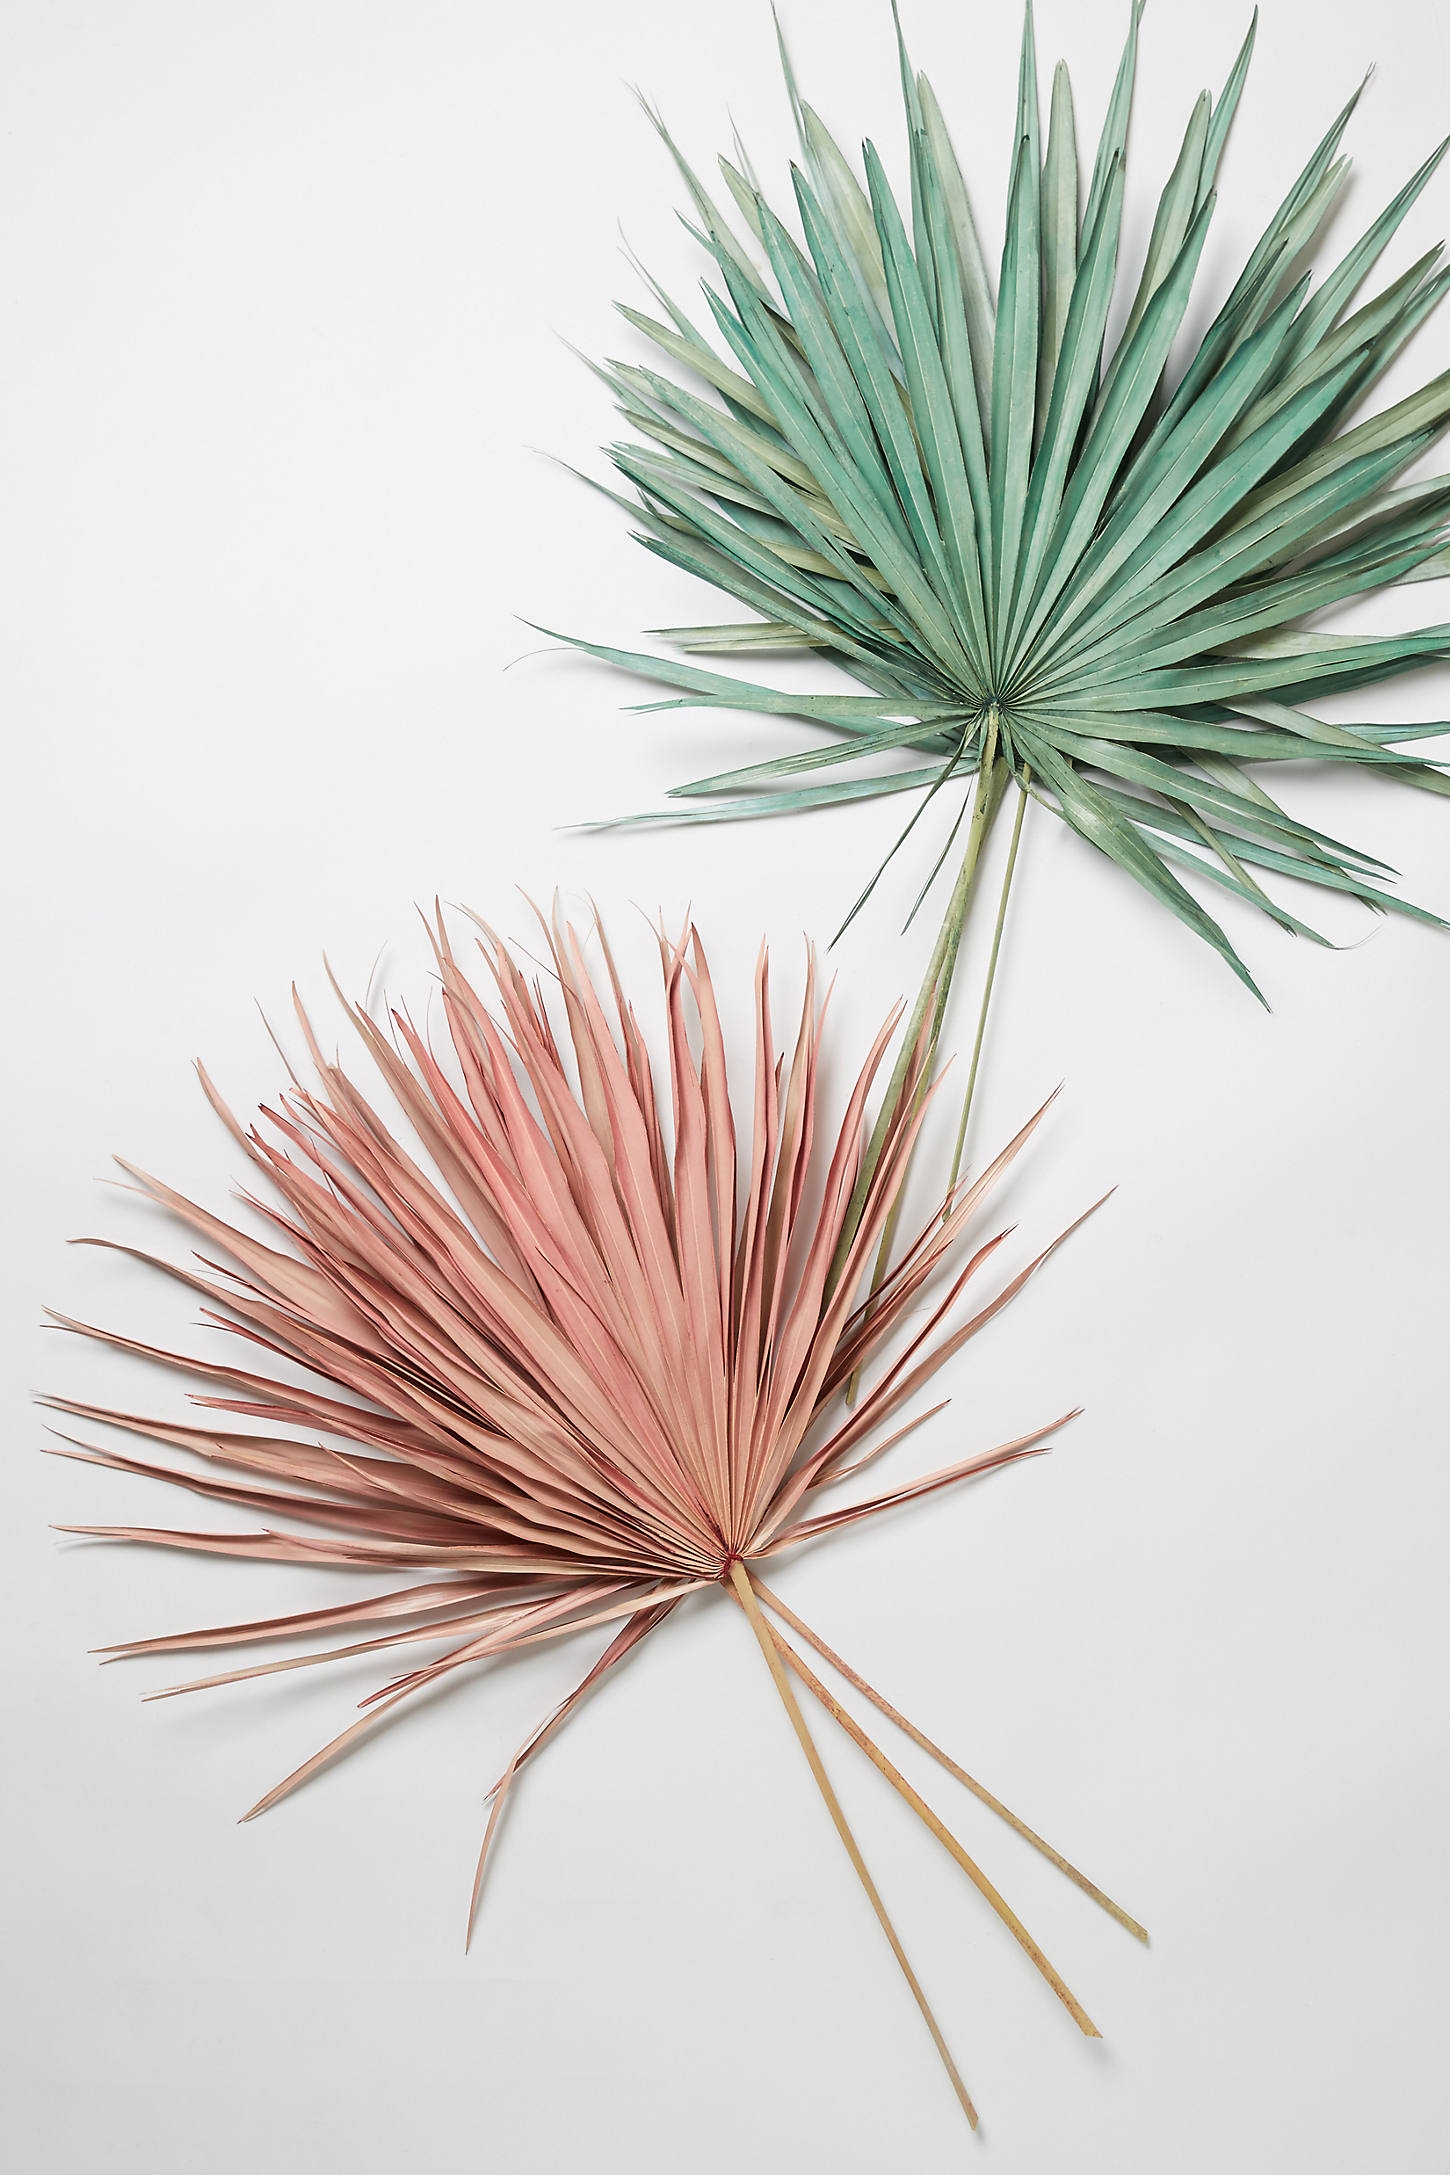 Colorful Dried Palm Bouquet - Image 0